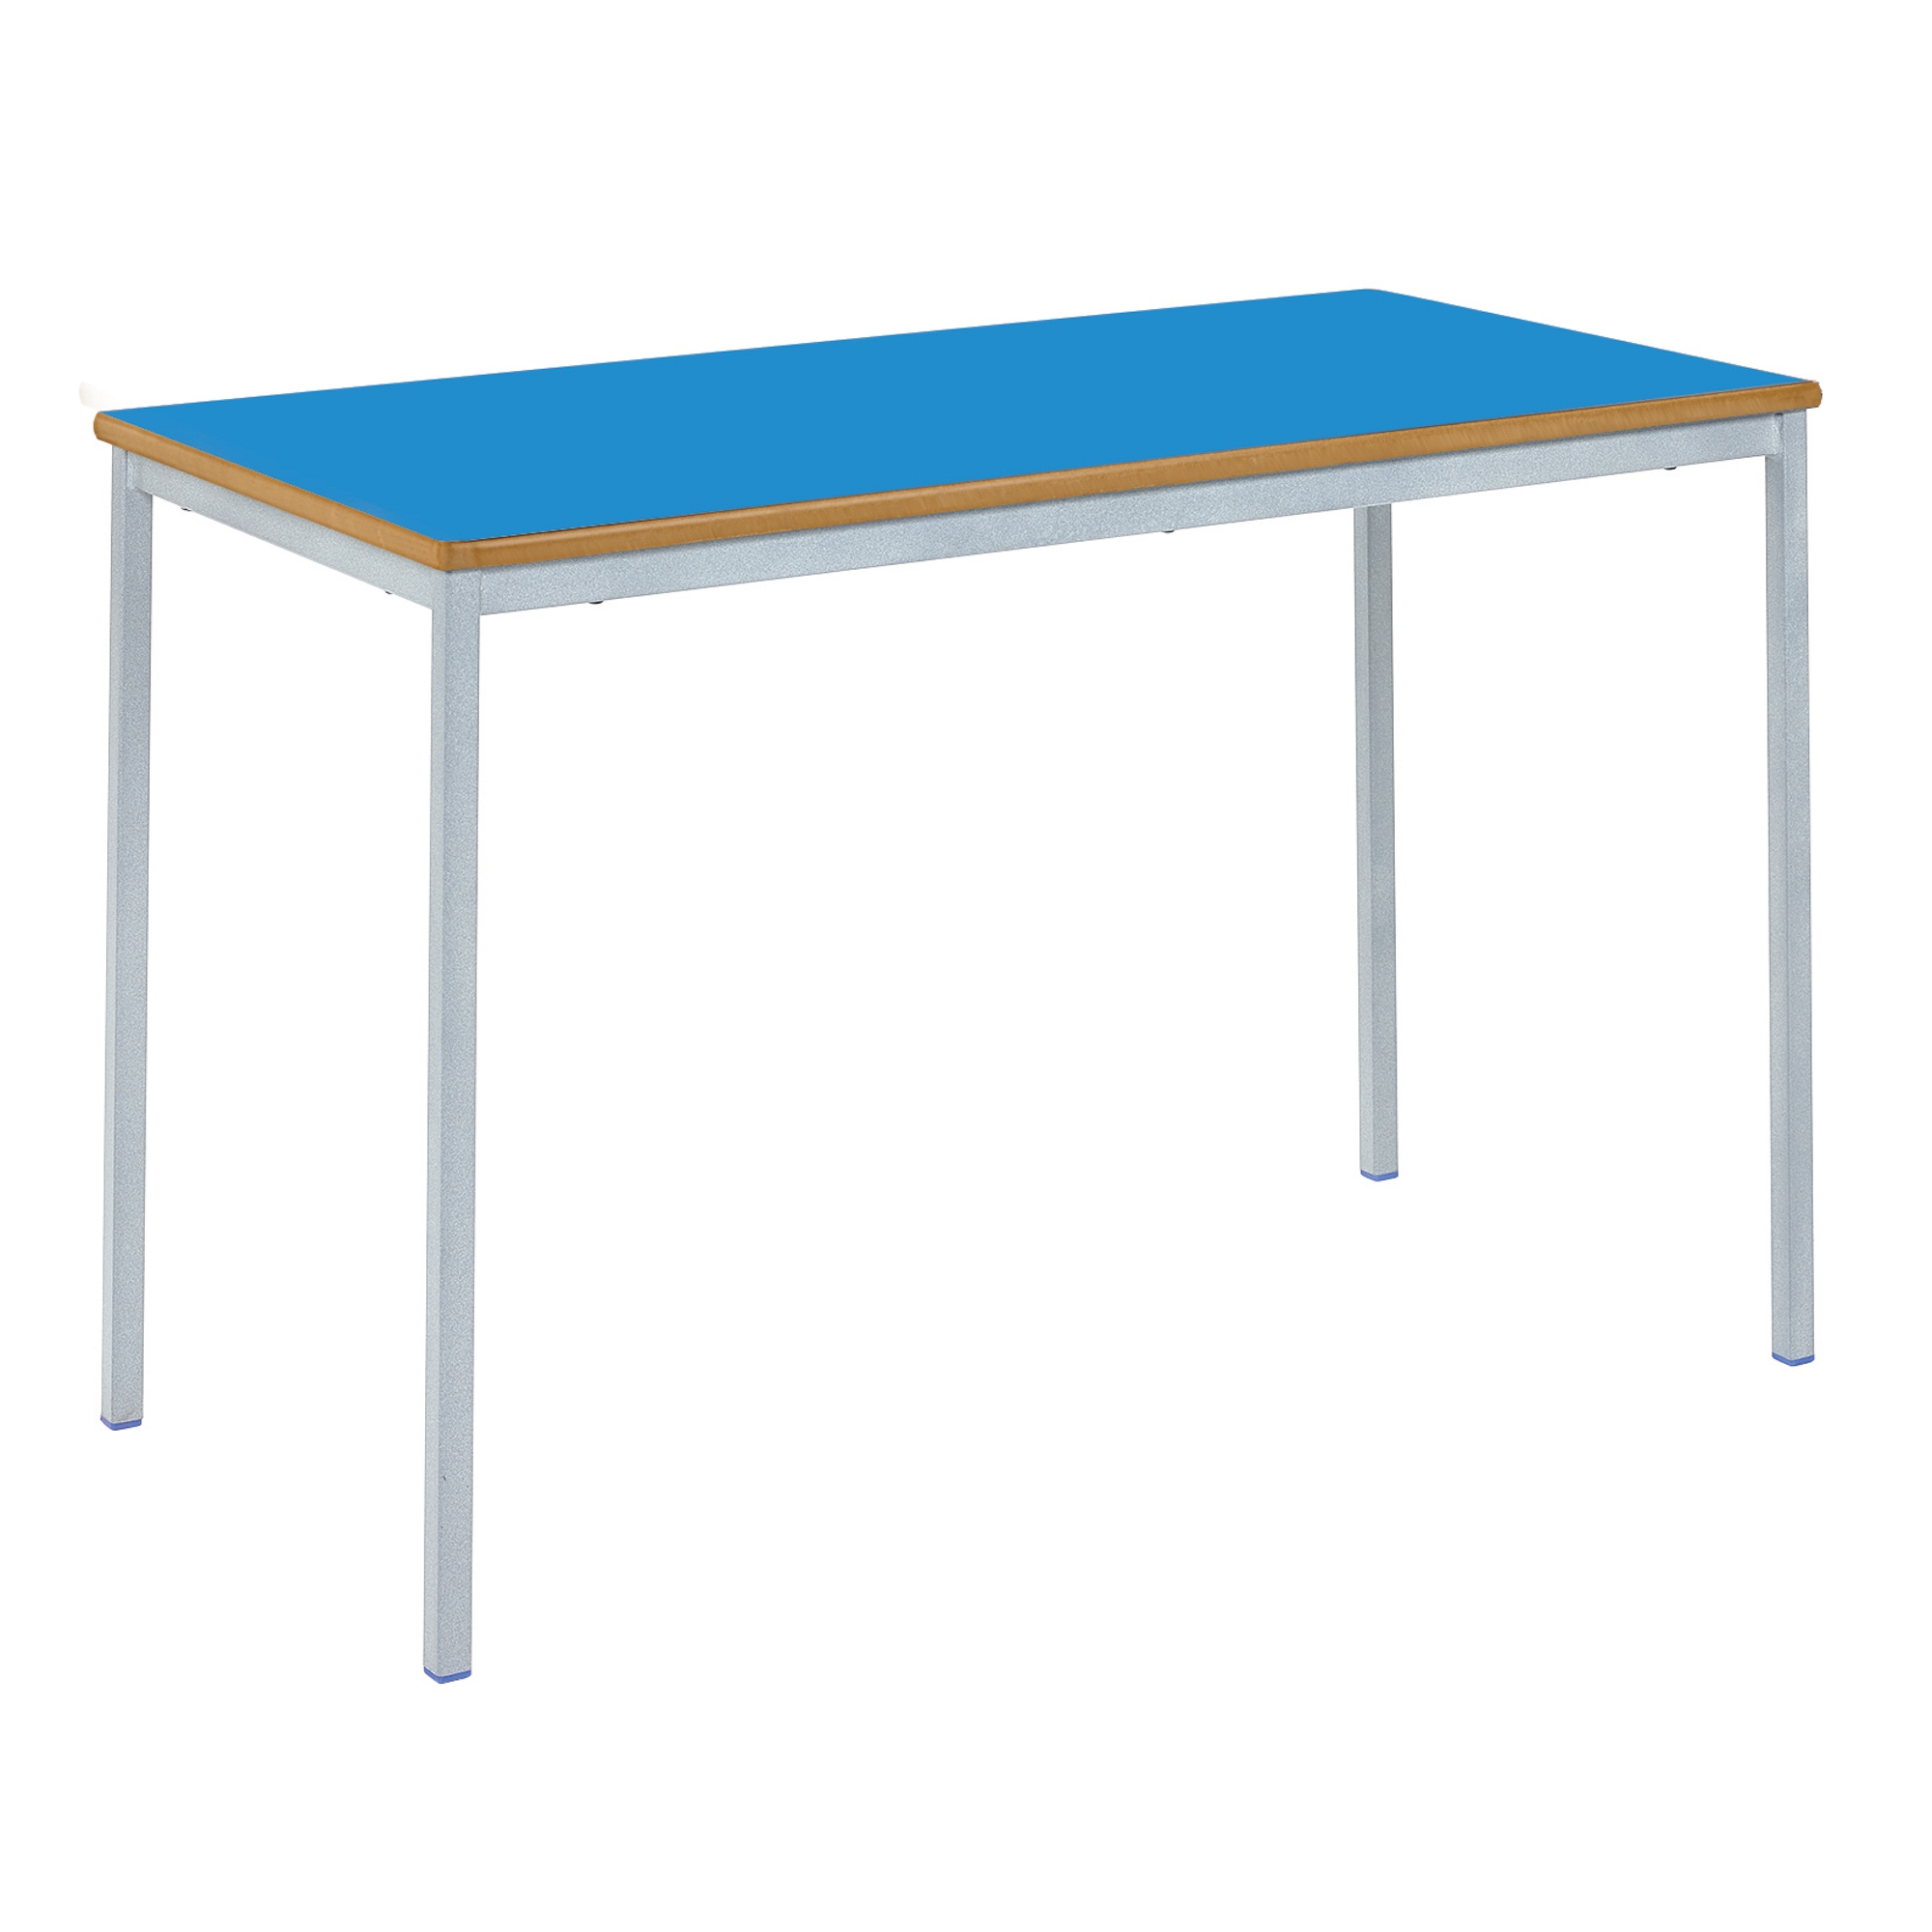 Classmates Rectangular Fully Welded Classroom Table - 1100 x 550 x 640mm - Blue